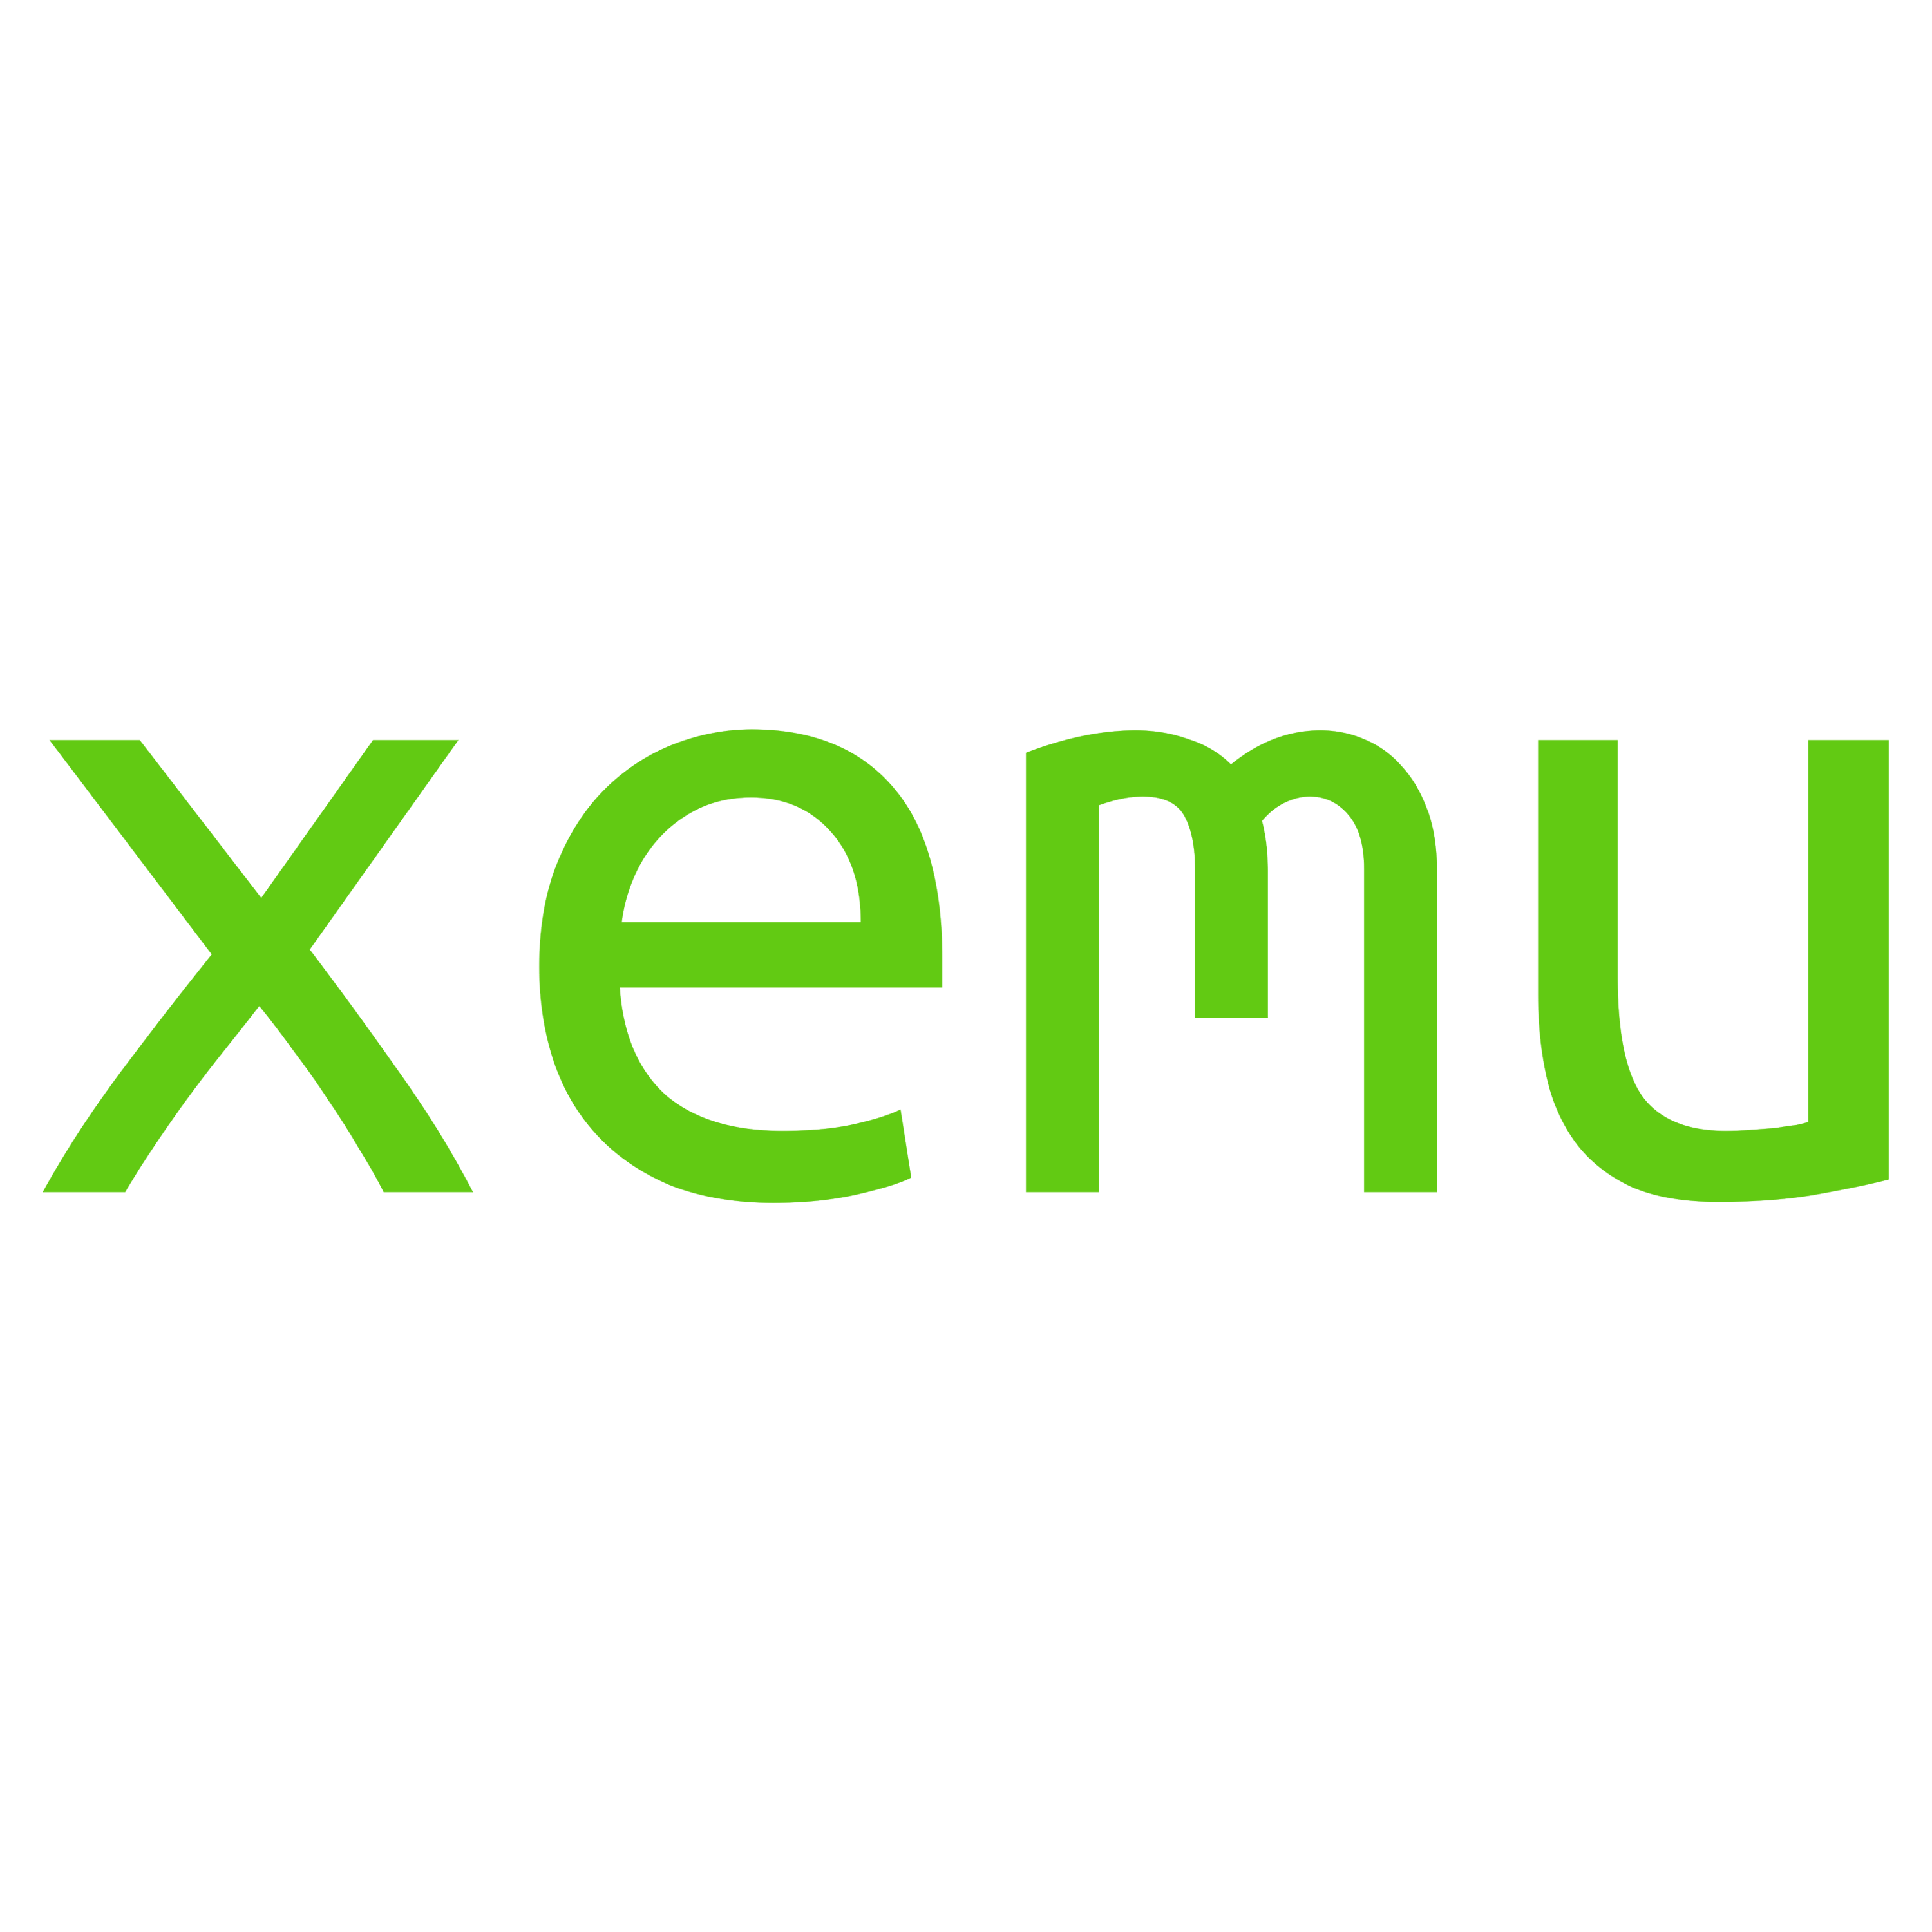 Xemu Logo Transparent Image